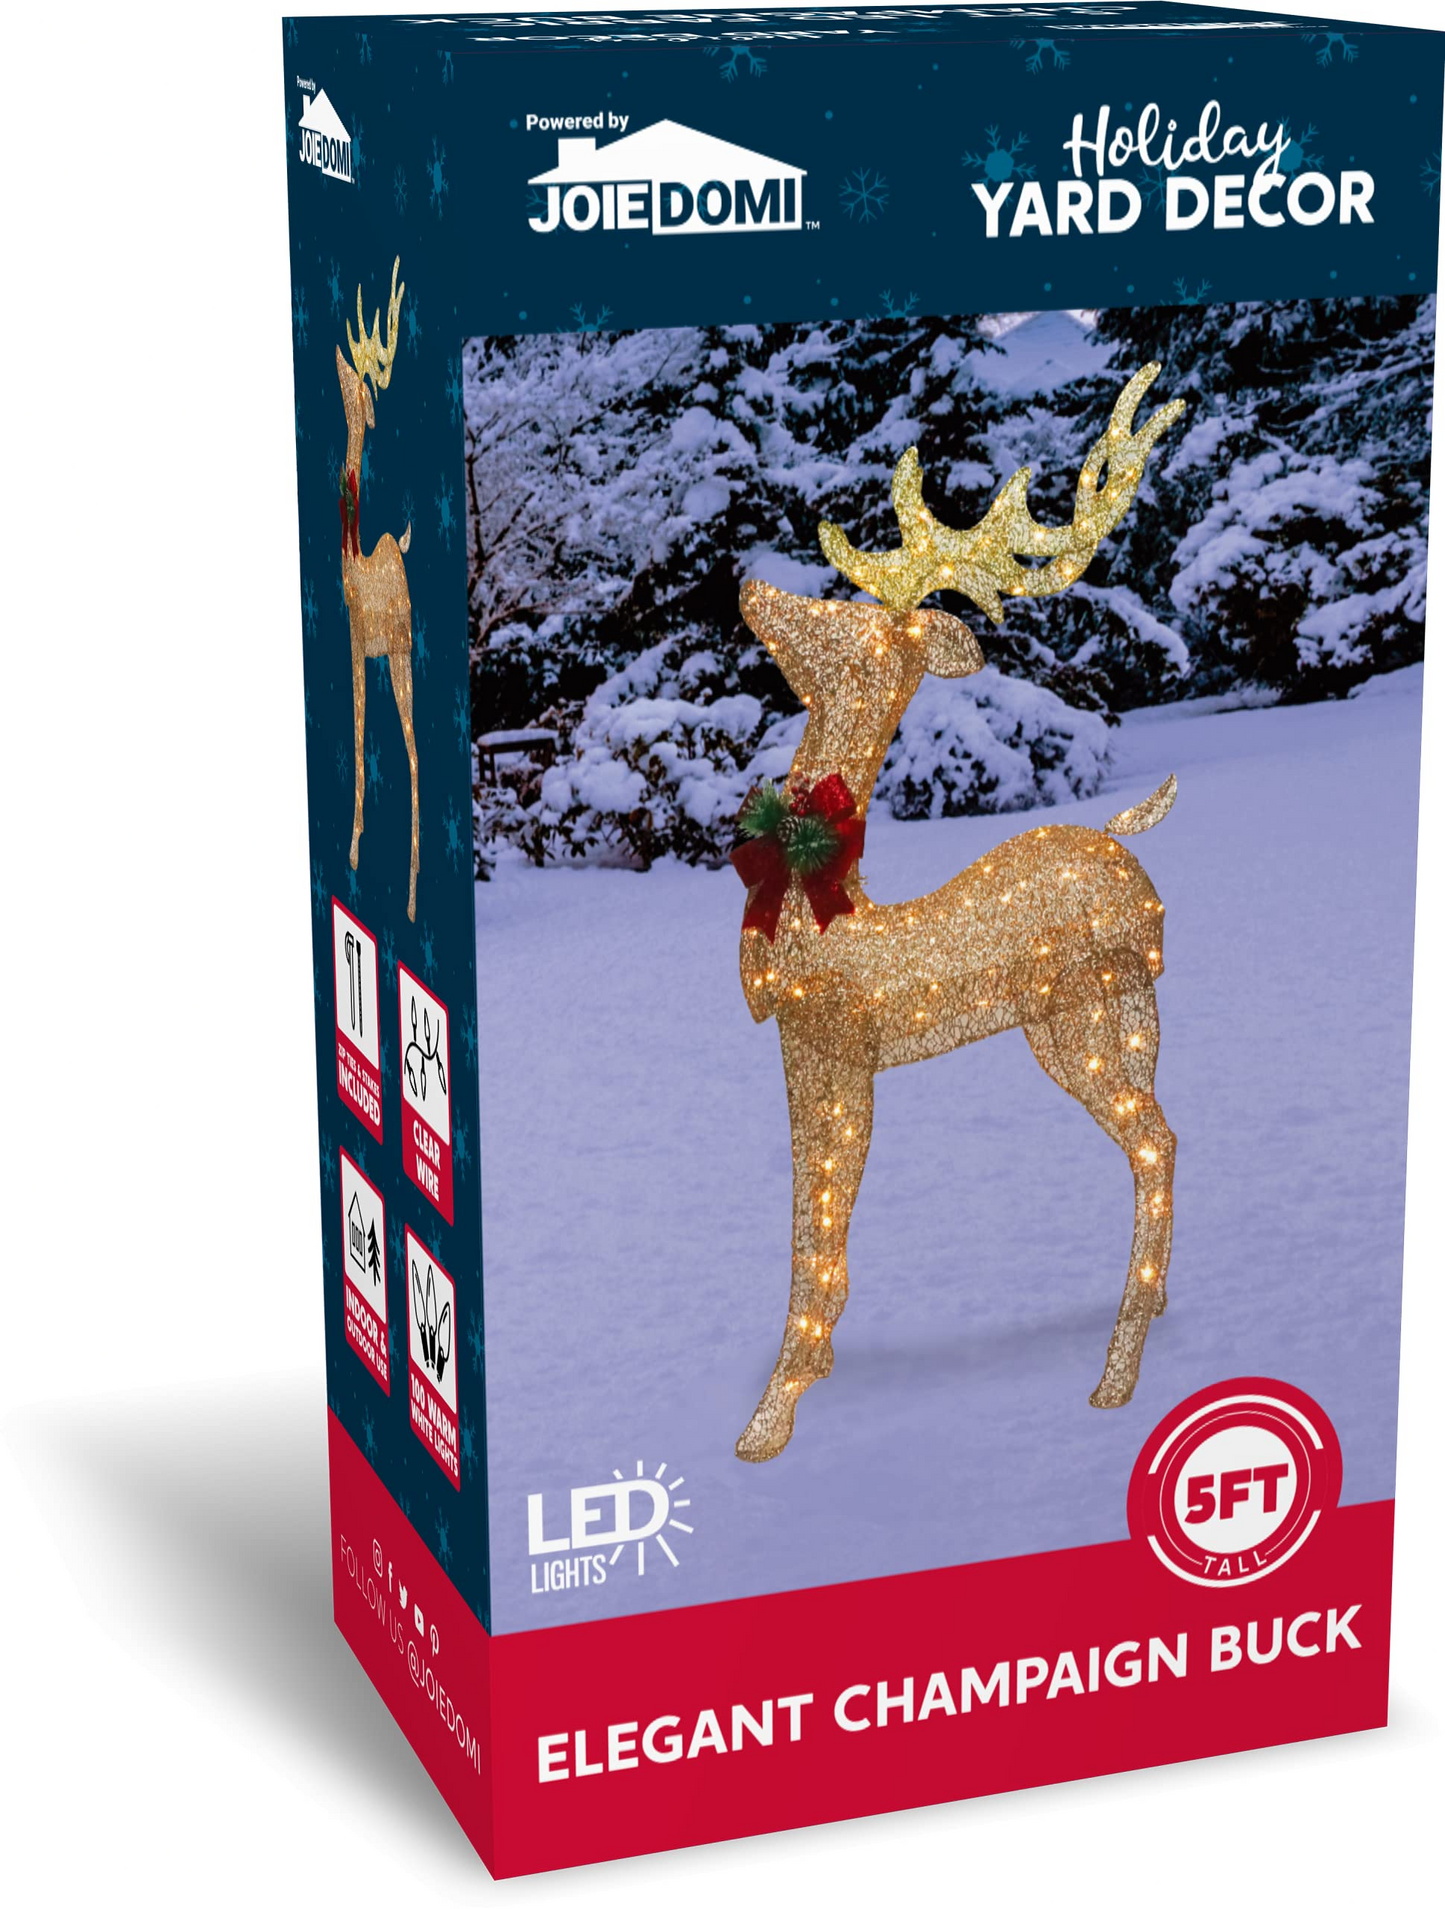 5ft LED Yard Lights - Fabric Champagne Buck